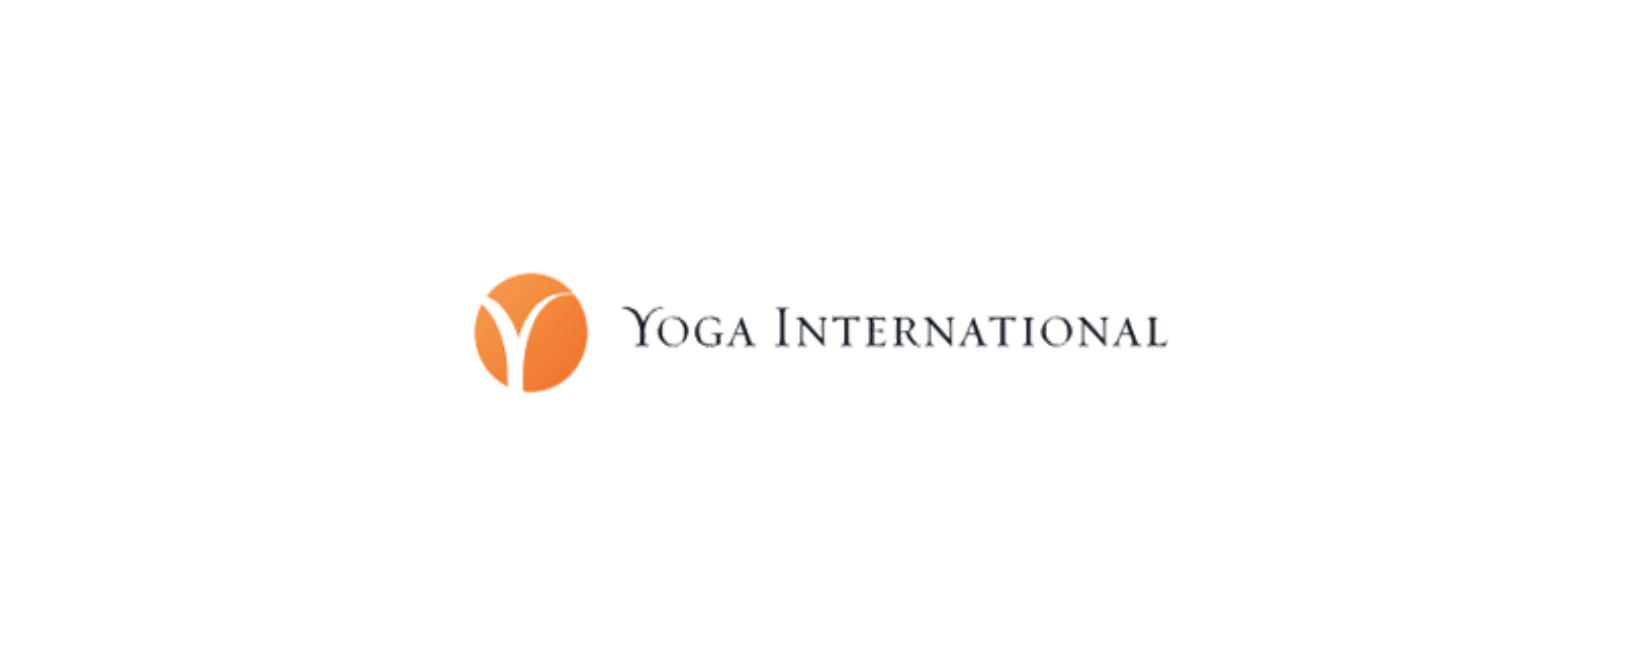 Yoga International Discount Code 2022